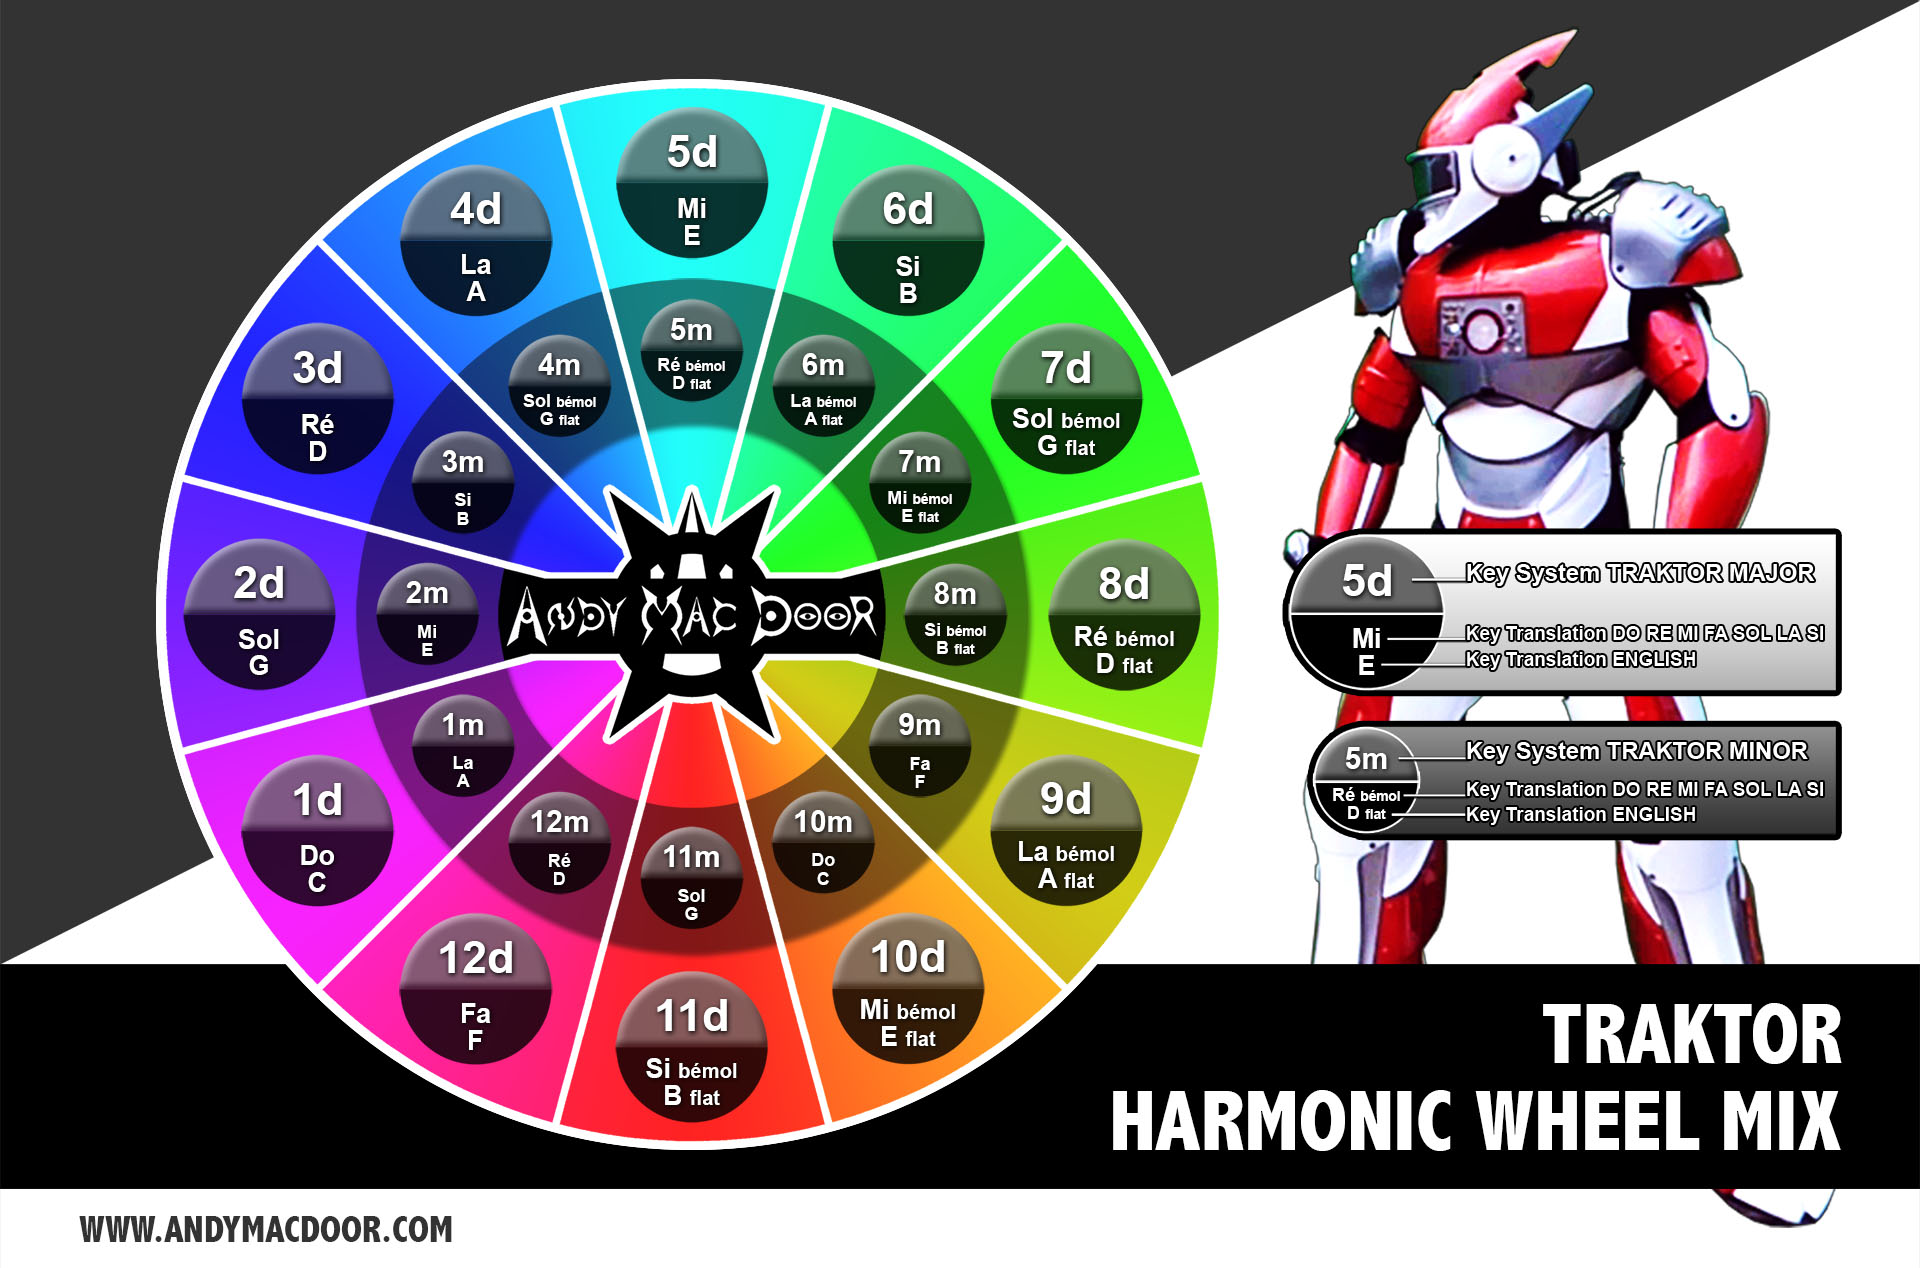 TRAKTOR - Harmonic mix wheel schema - TRANSLATION - Camelot - by Andy Mac Door